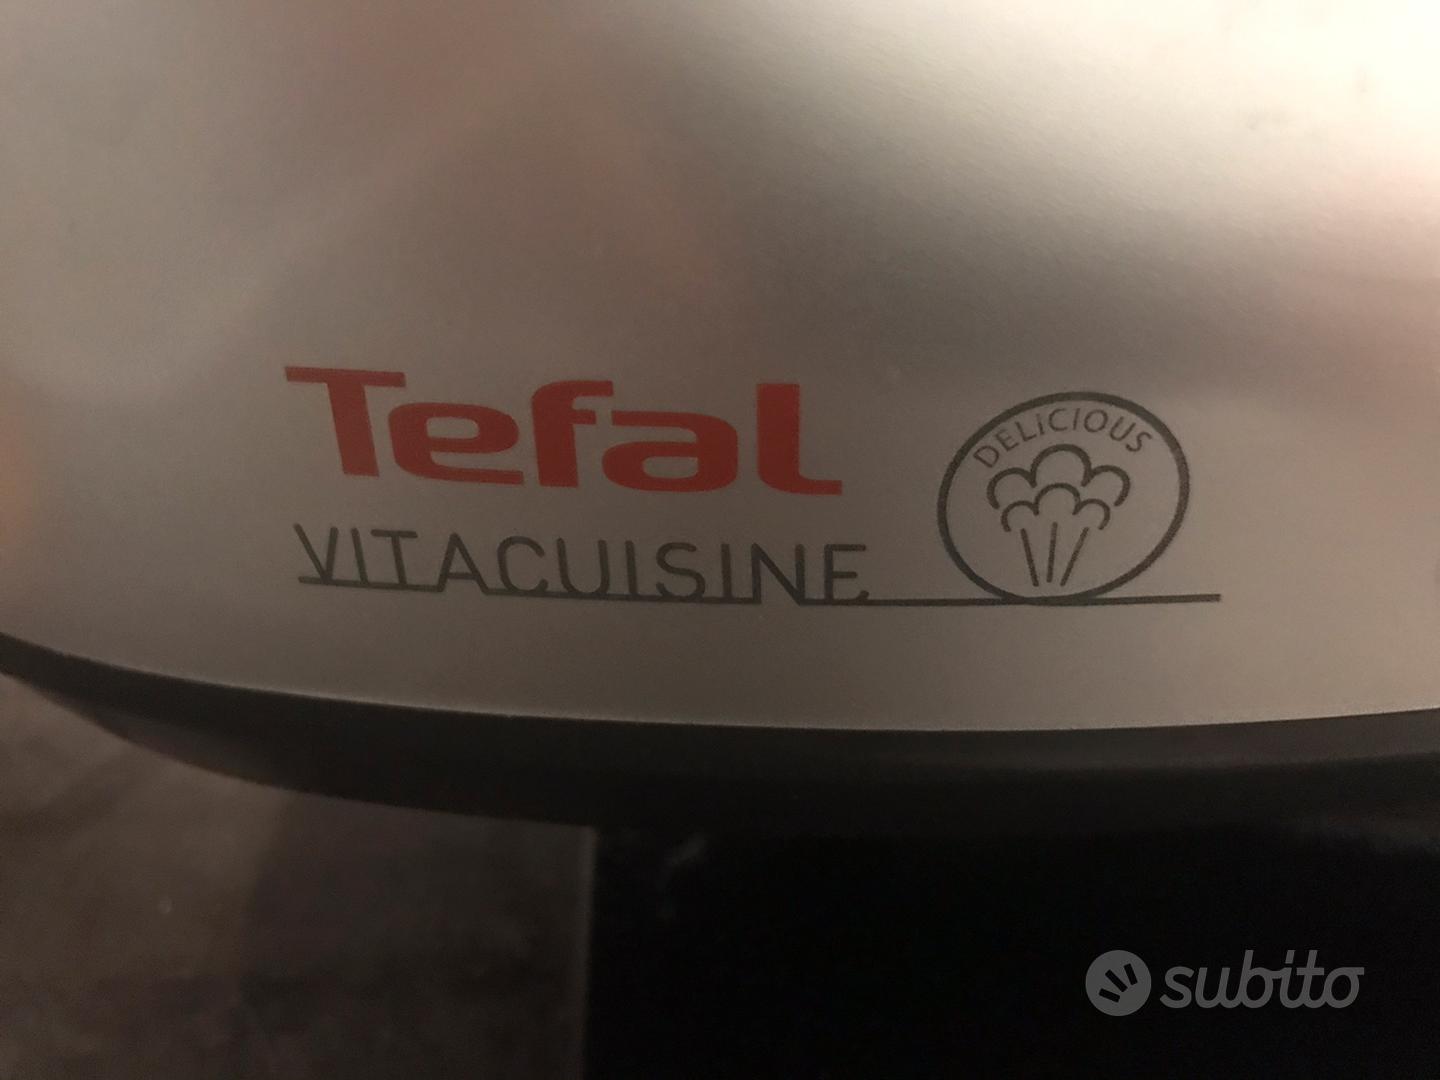 Vaporiera Tefal VitalCusine - Arredamento e Casalinghi In vendita a Modena